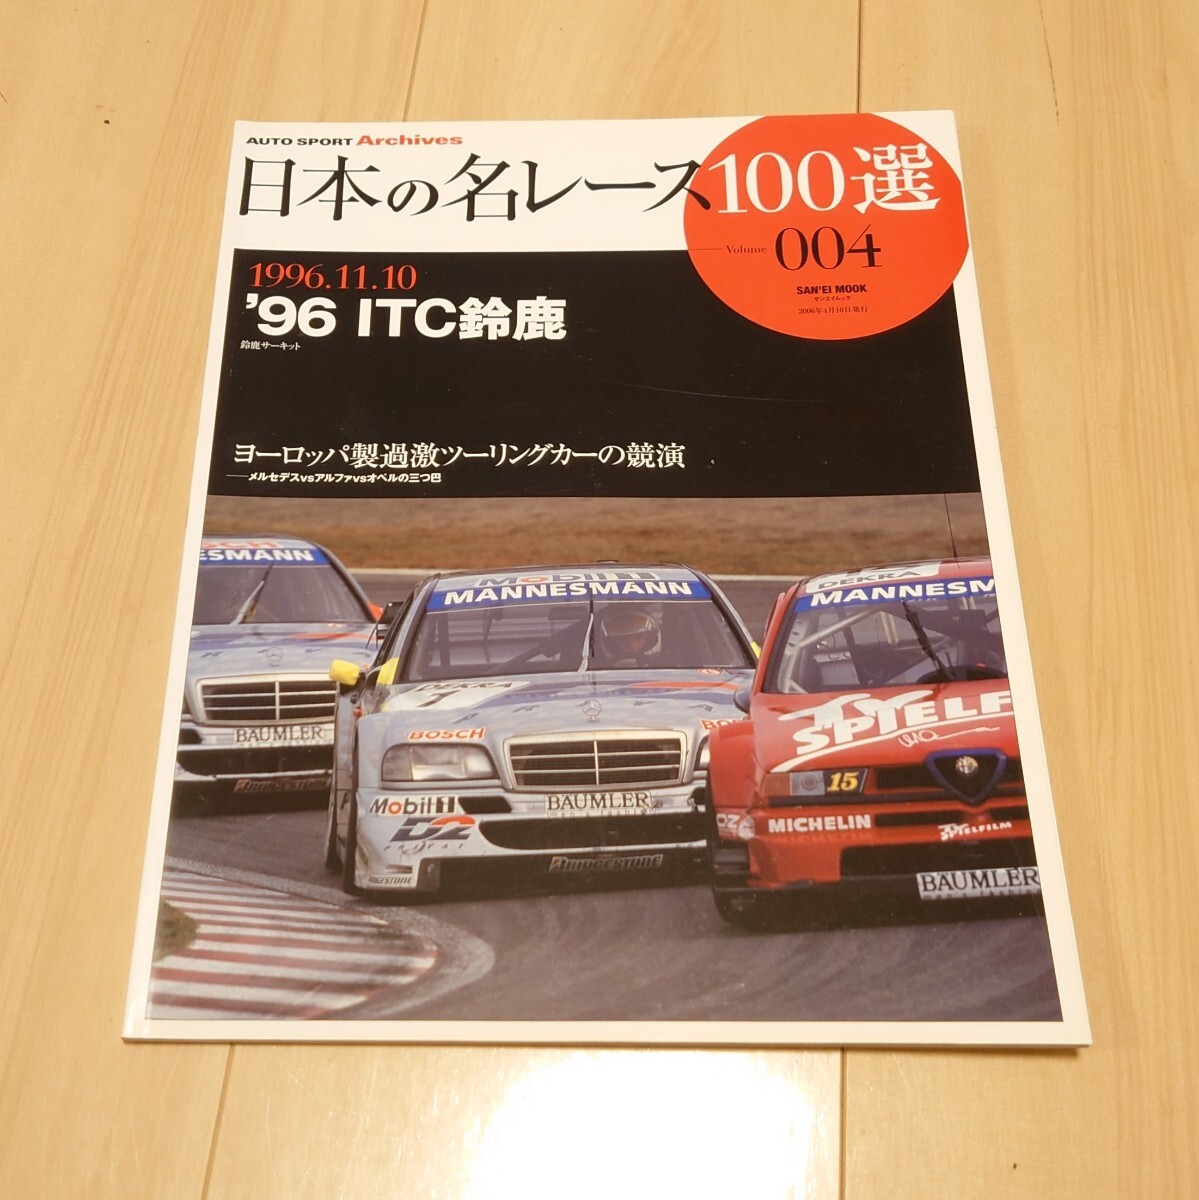 三栄書房 日本の名レース100選 004 vol.04 '96 ITC鈴鹿 車 雑誌_画像1